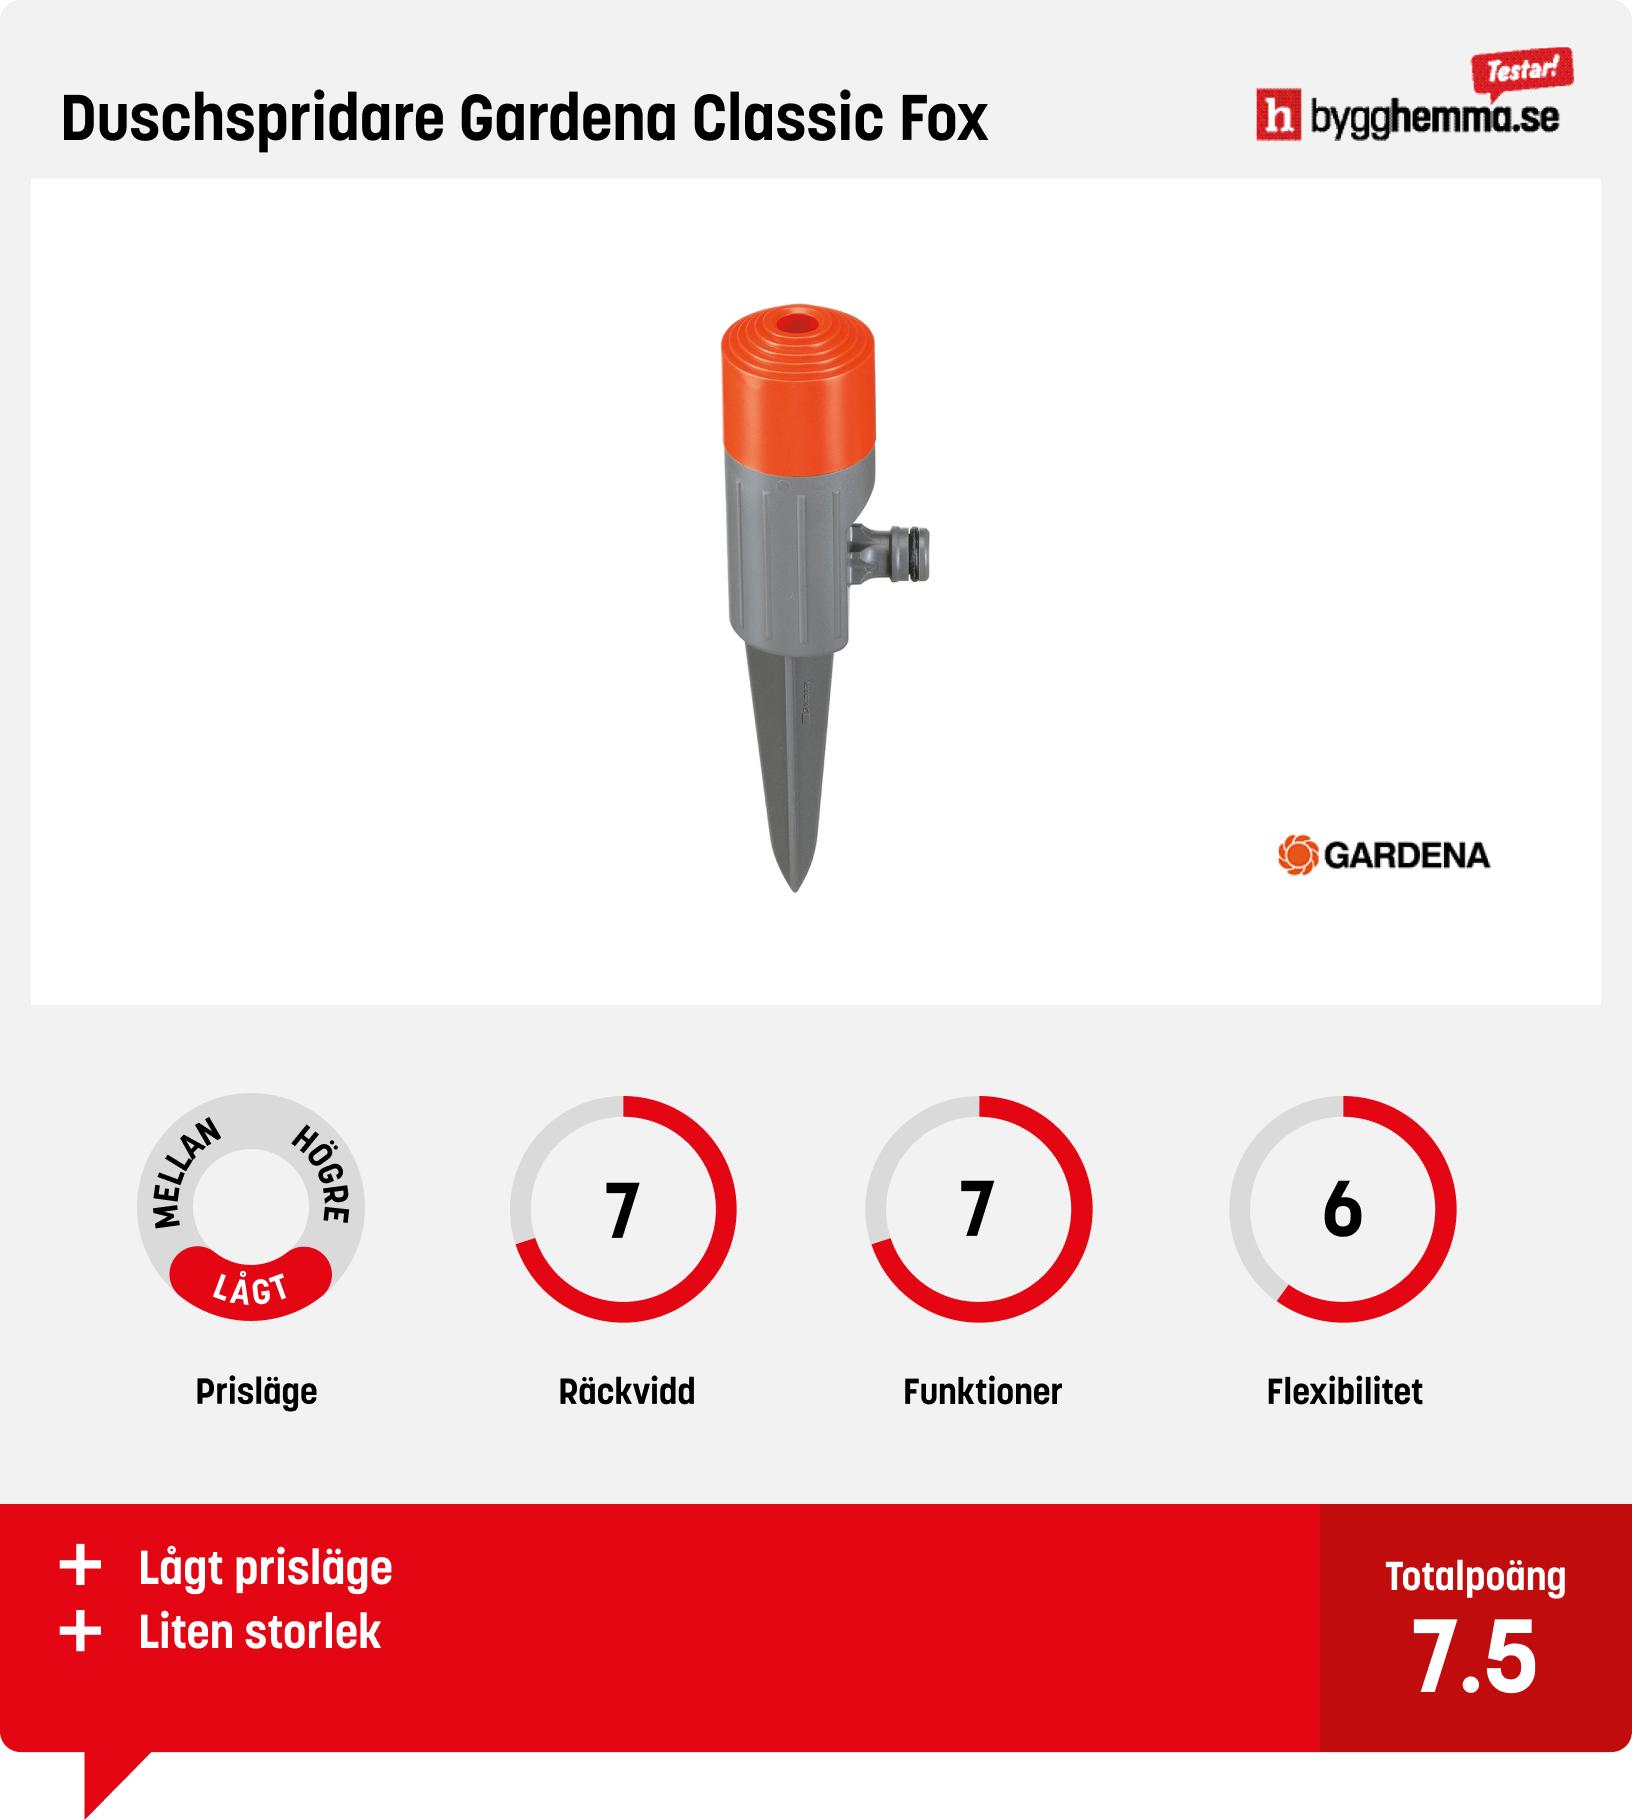 Vattensprinkler gräsmatta bäst i test - Duschspridare Gardena Classic Fox